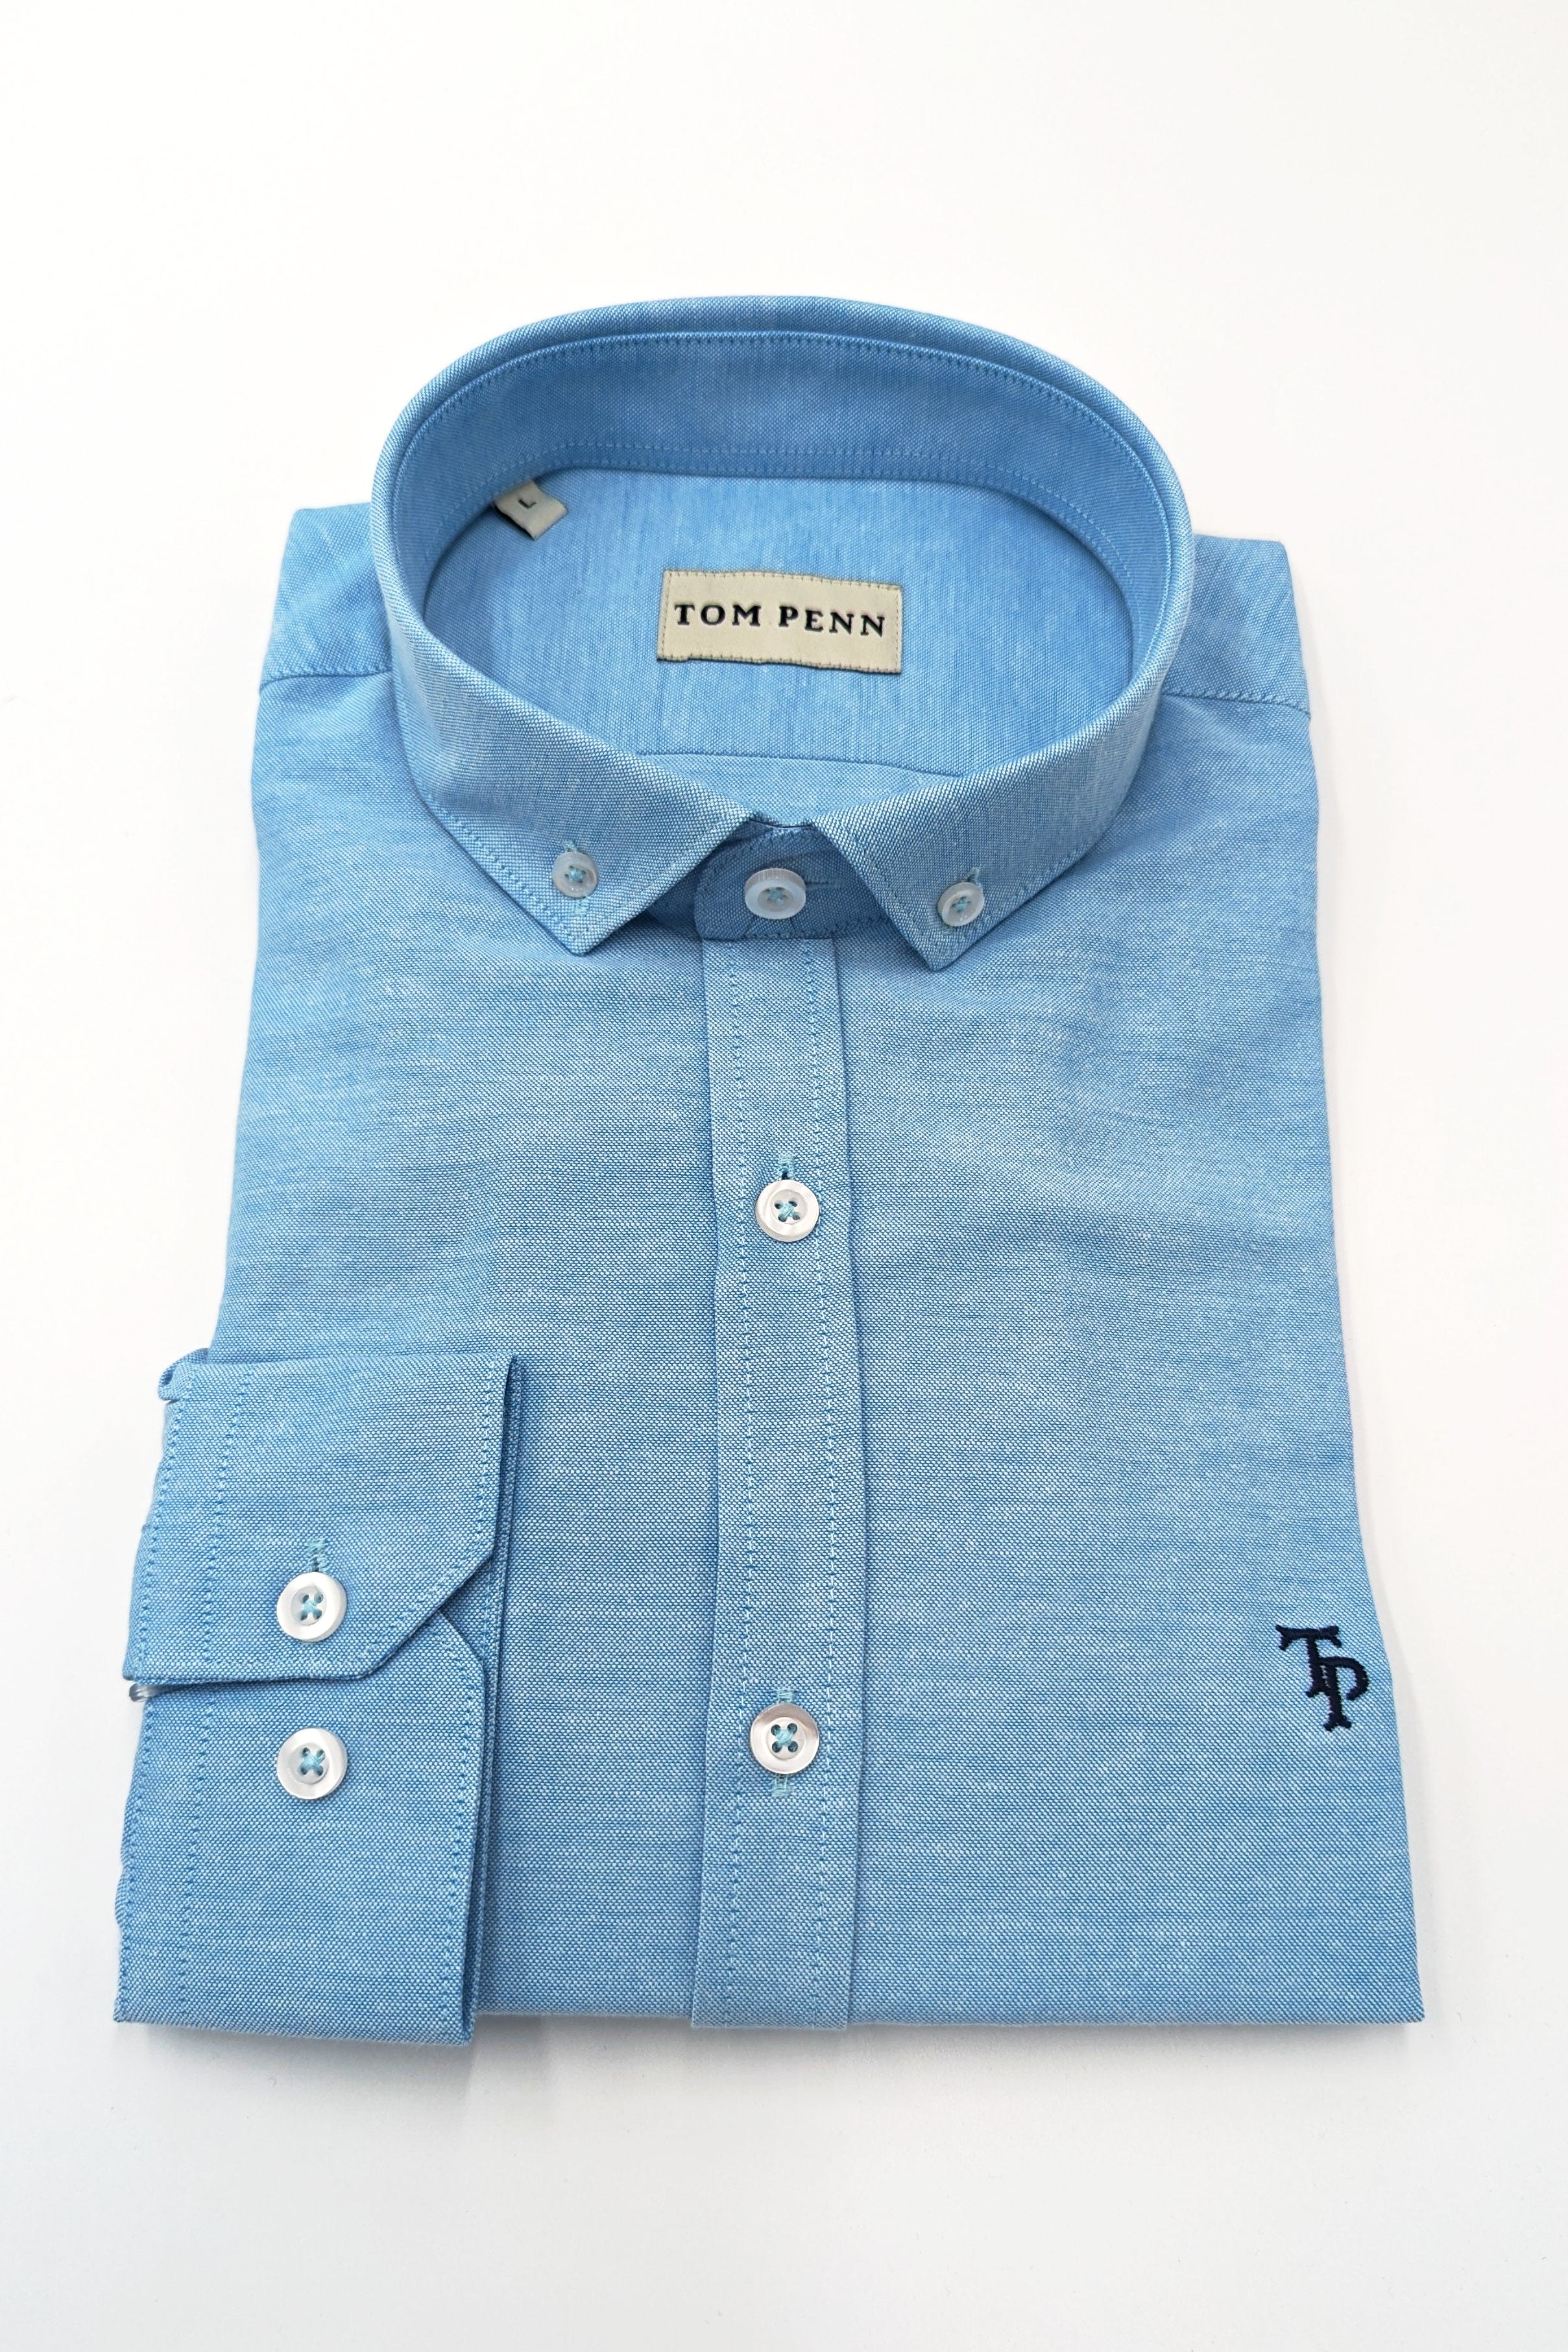 Tom Penn Slim fit Button Down Turquoise Shirt